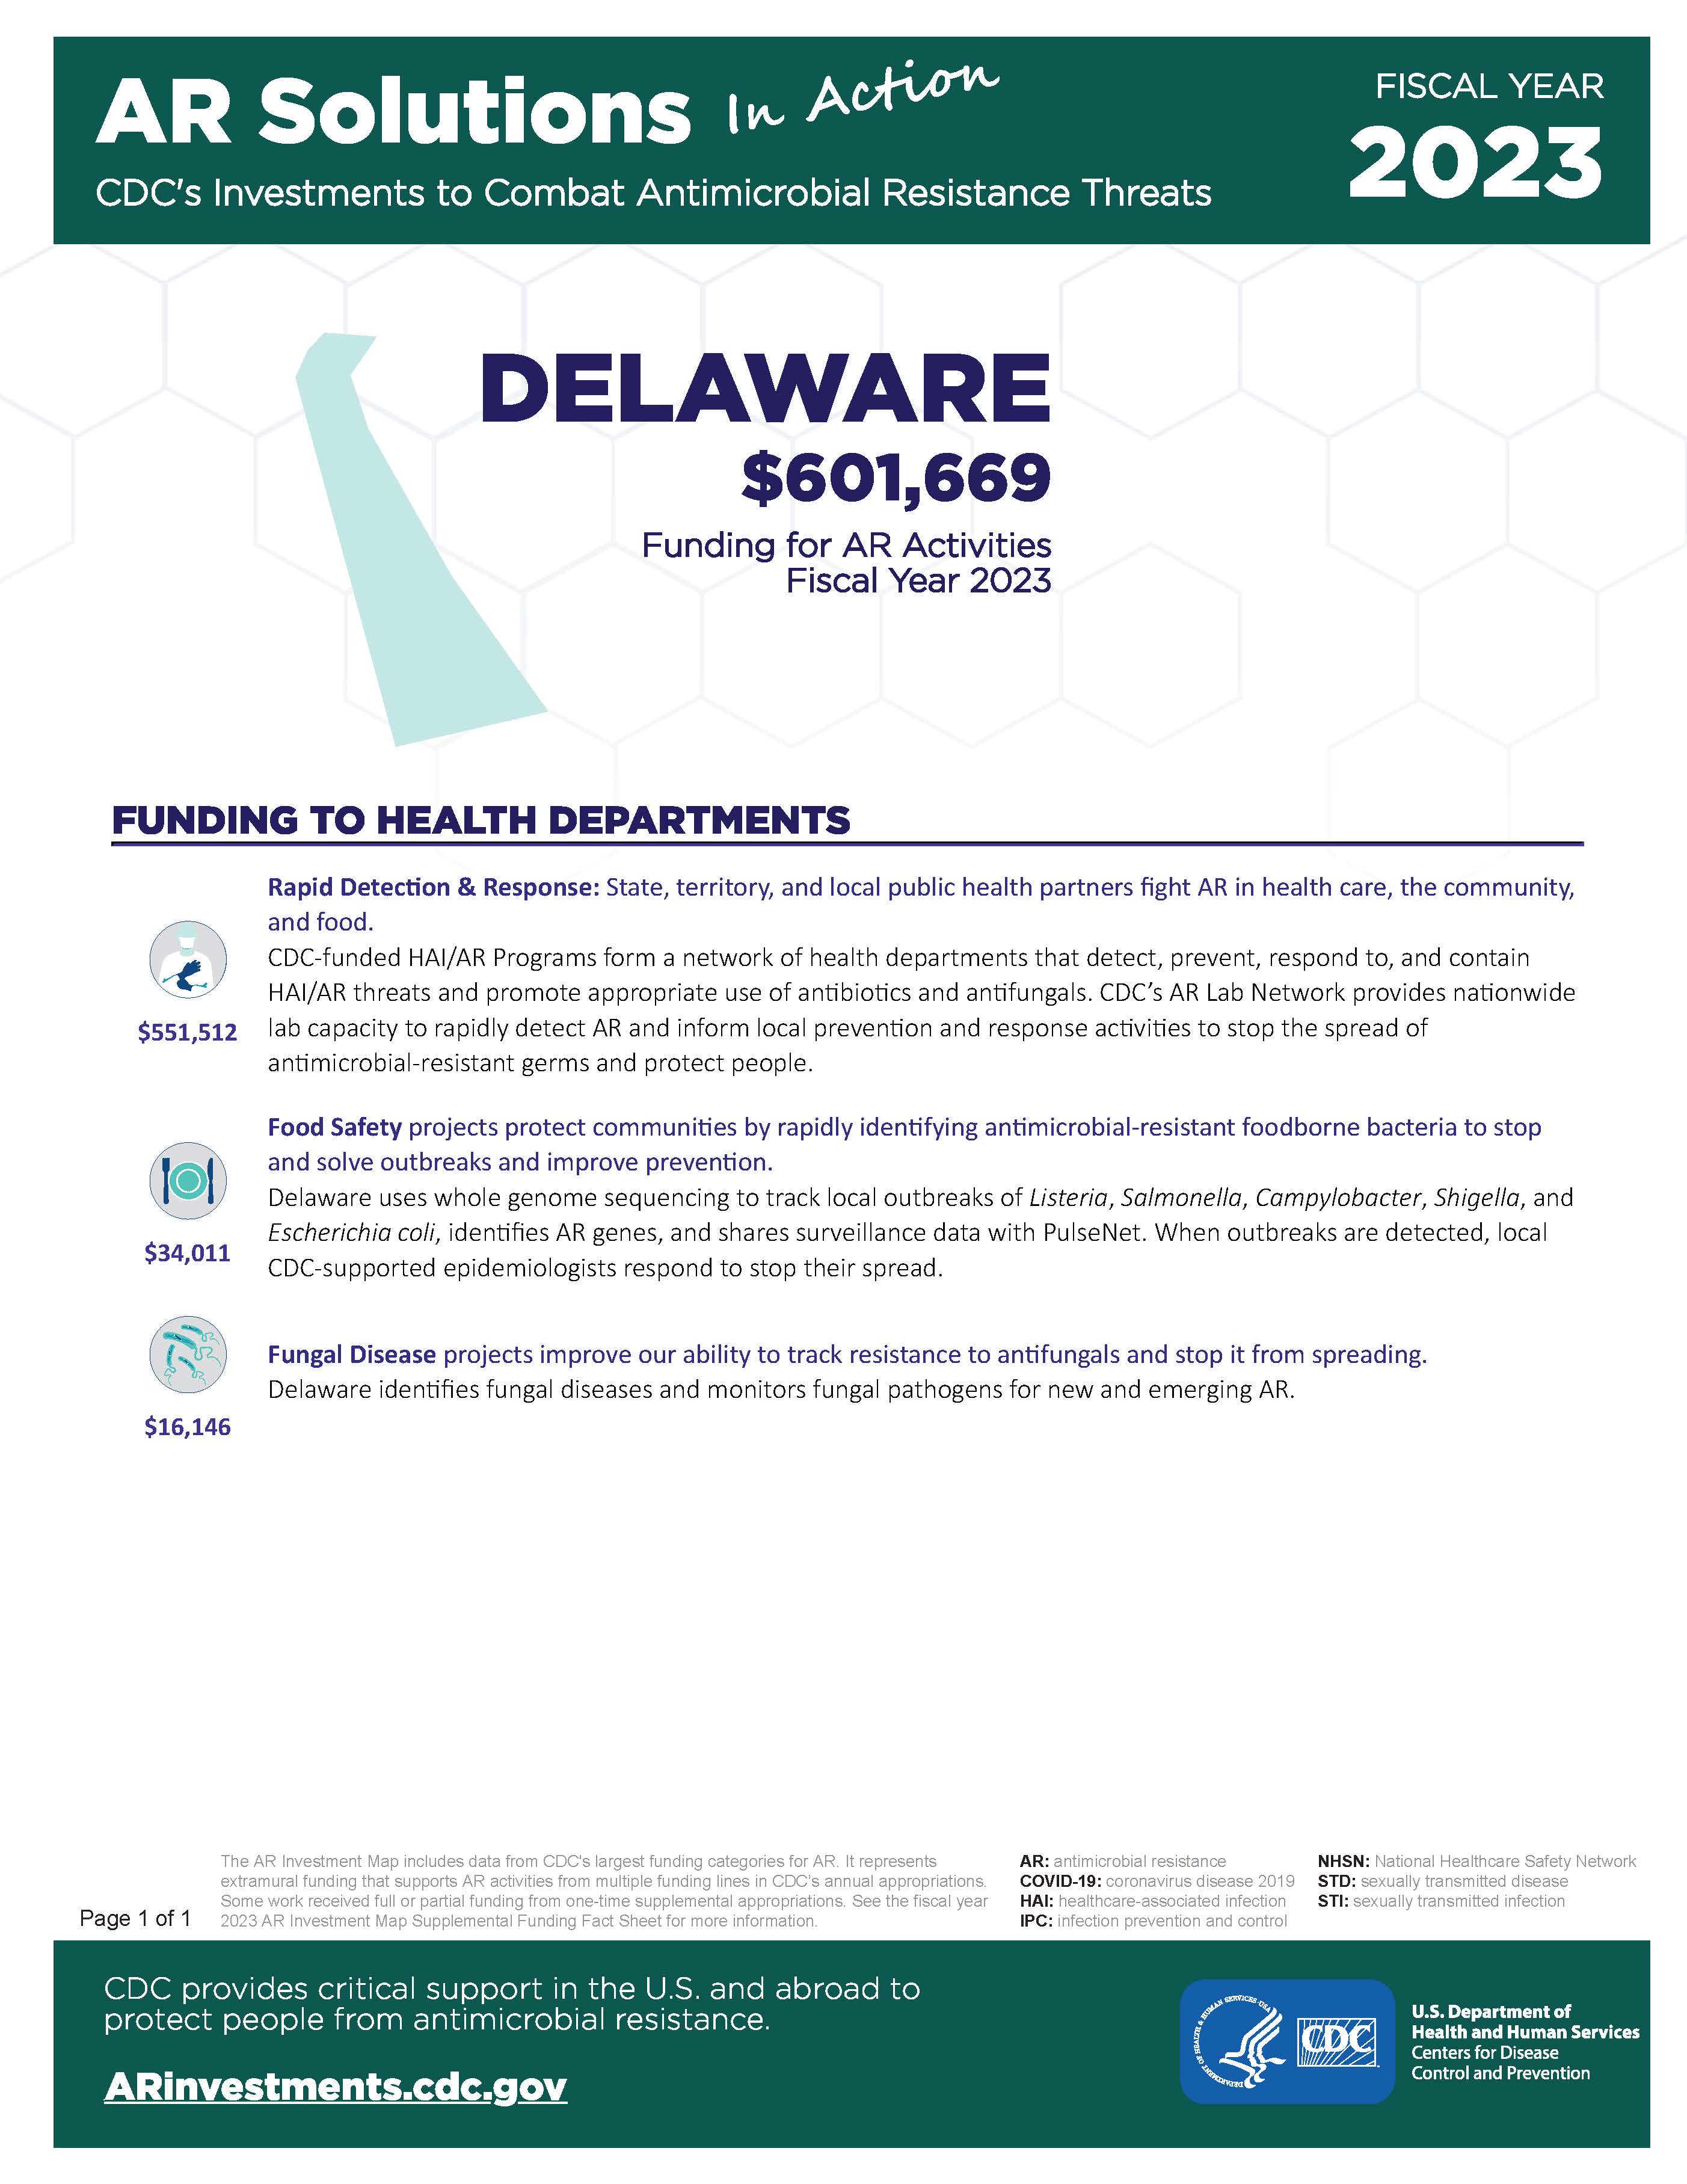 View Factsheet for Delaware